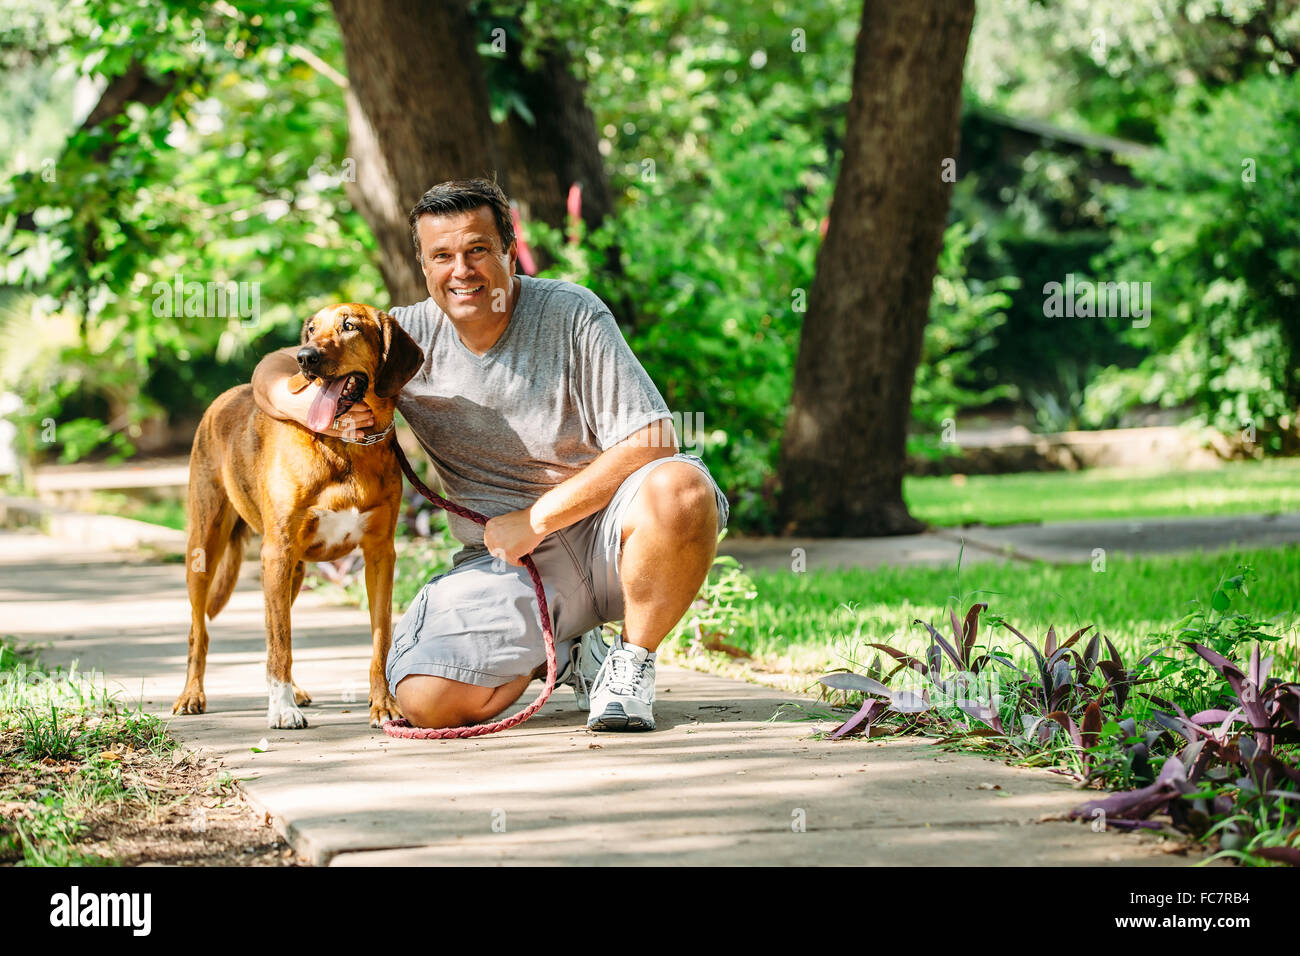 Caucasian man petting dog on sidewalk Banque D'Images